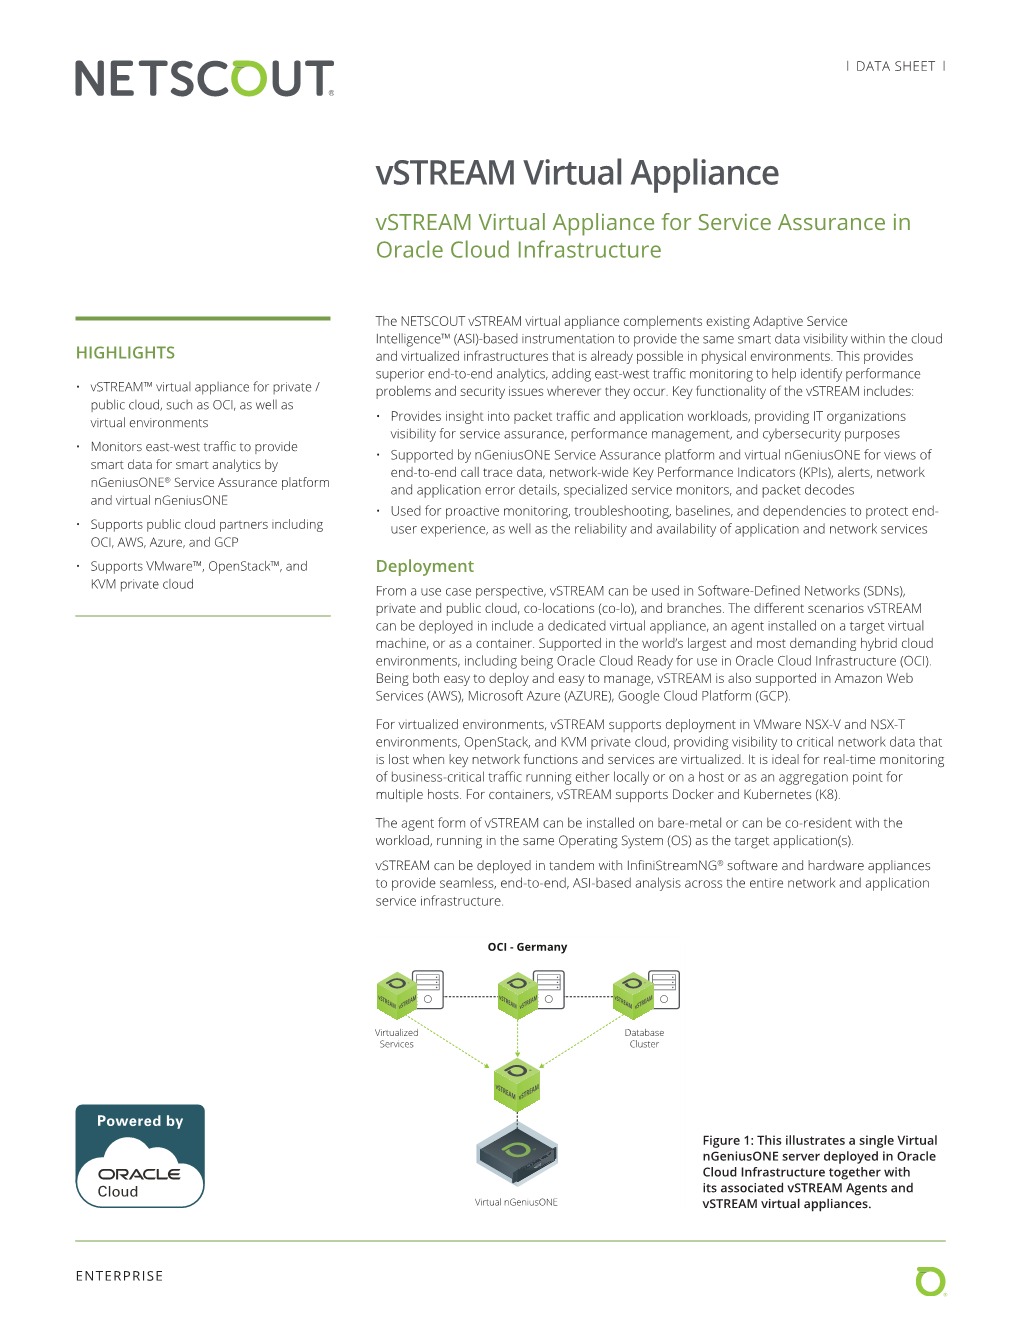 Data Sheet Vstream Virtual Appliance for Service